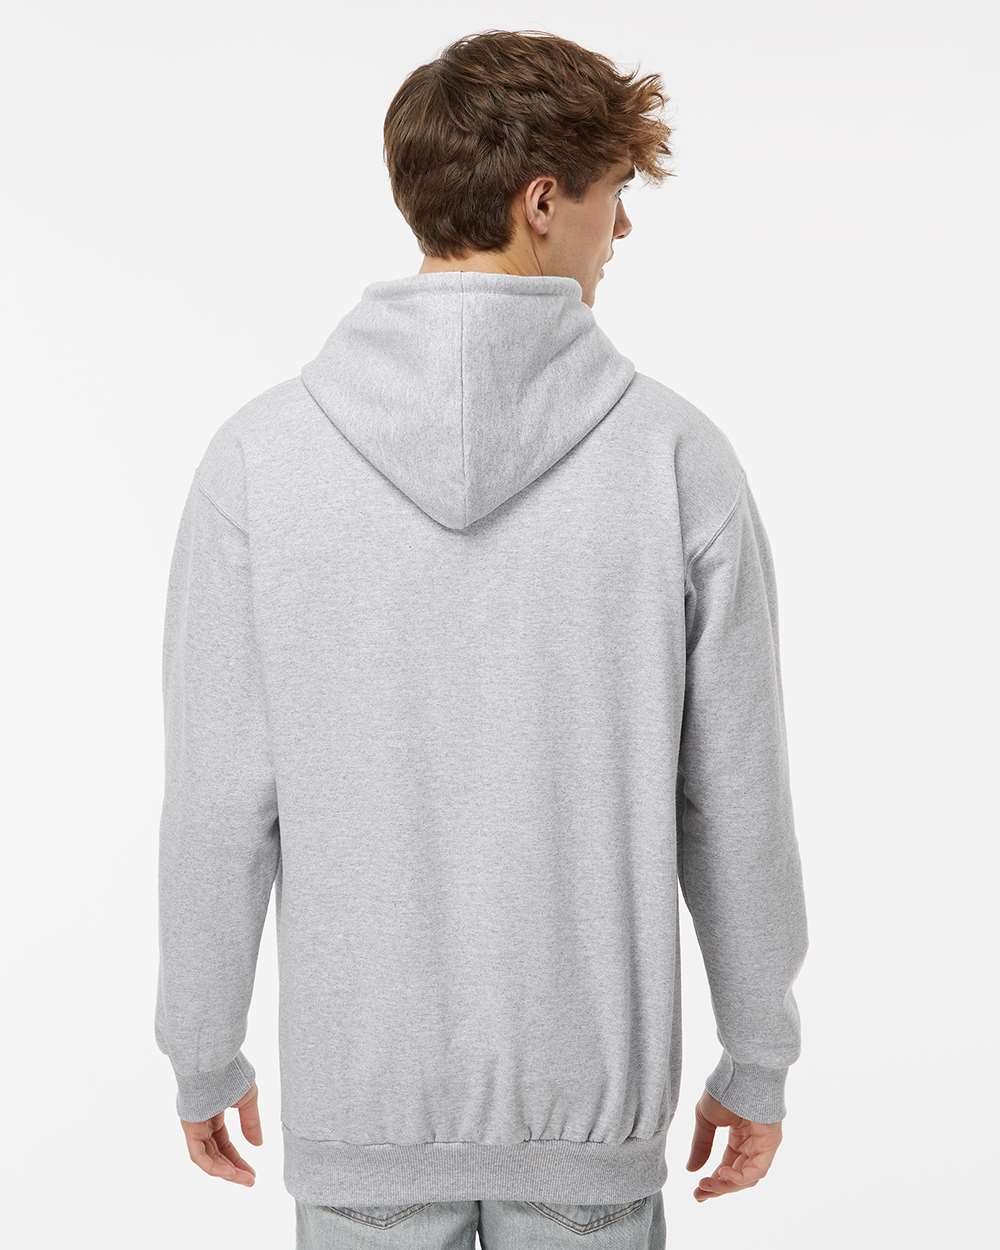 King Fashion Two-Tone Hooded Sweatshirt KF9041 #colormdl_Sport Grey/ Navy